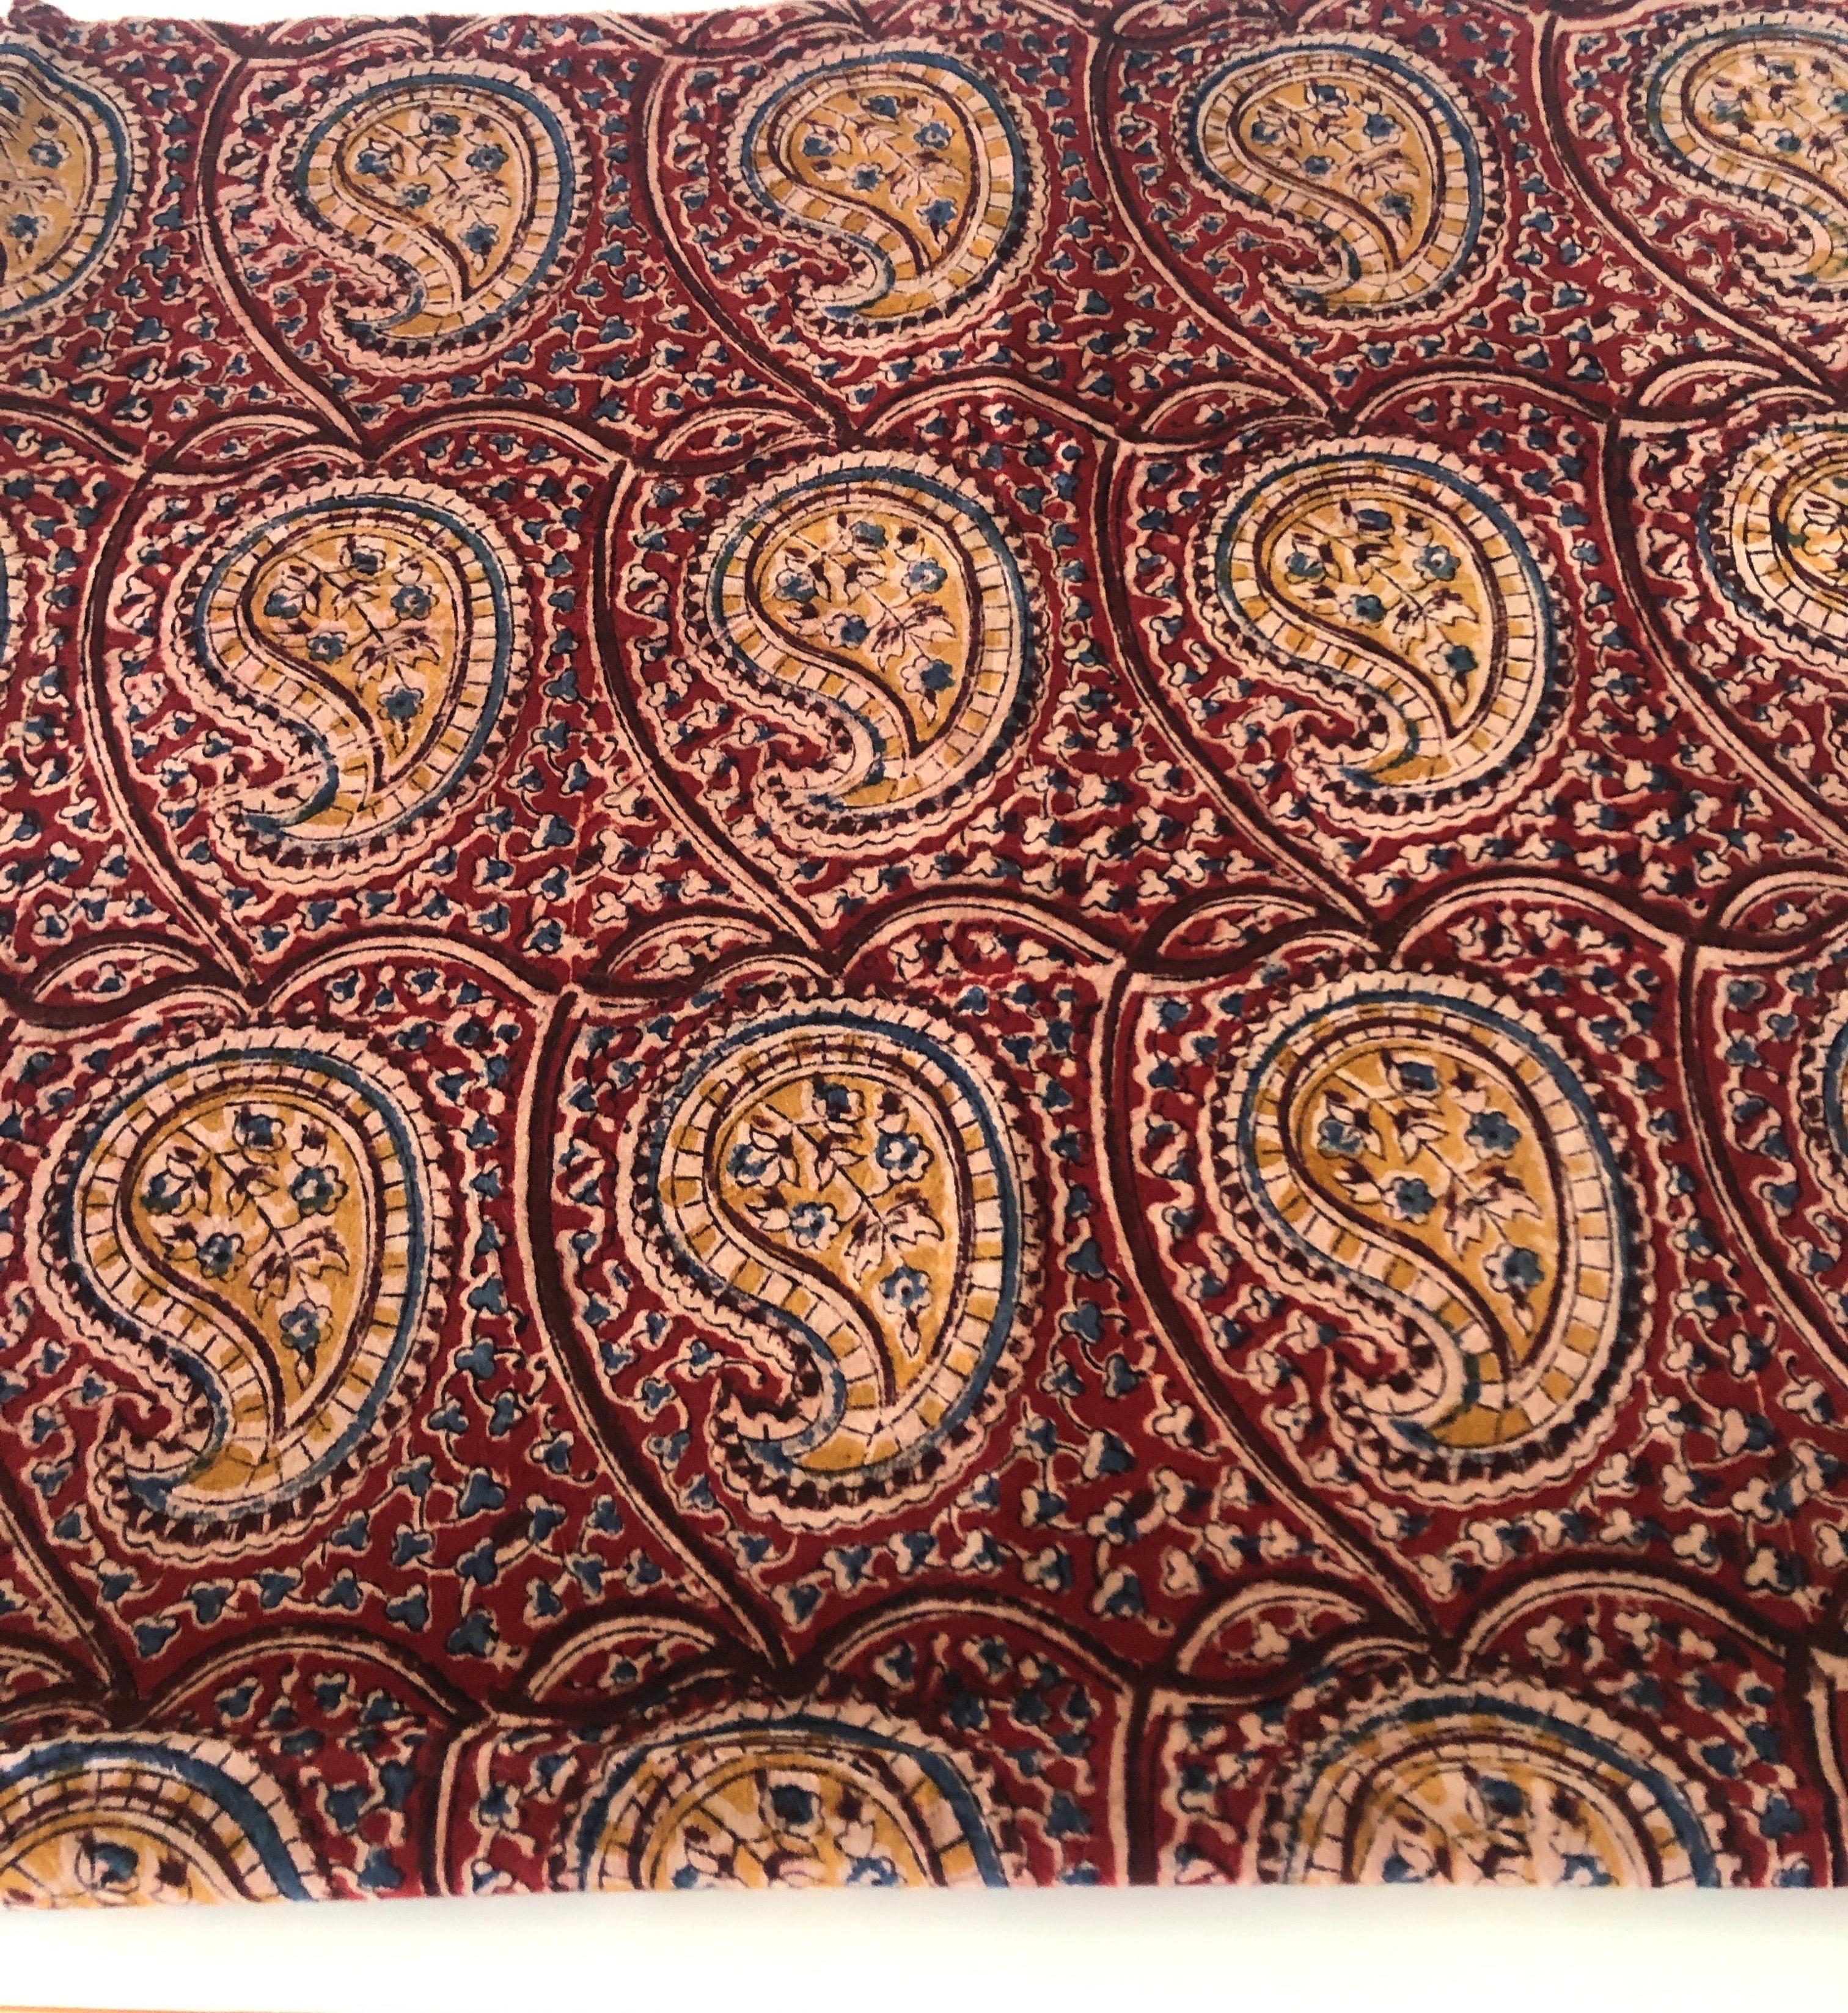 Late 20th Century Vintage Red and Brown Cotton Printed Kalamkari Print Textile